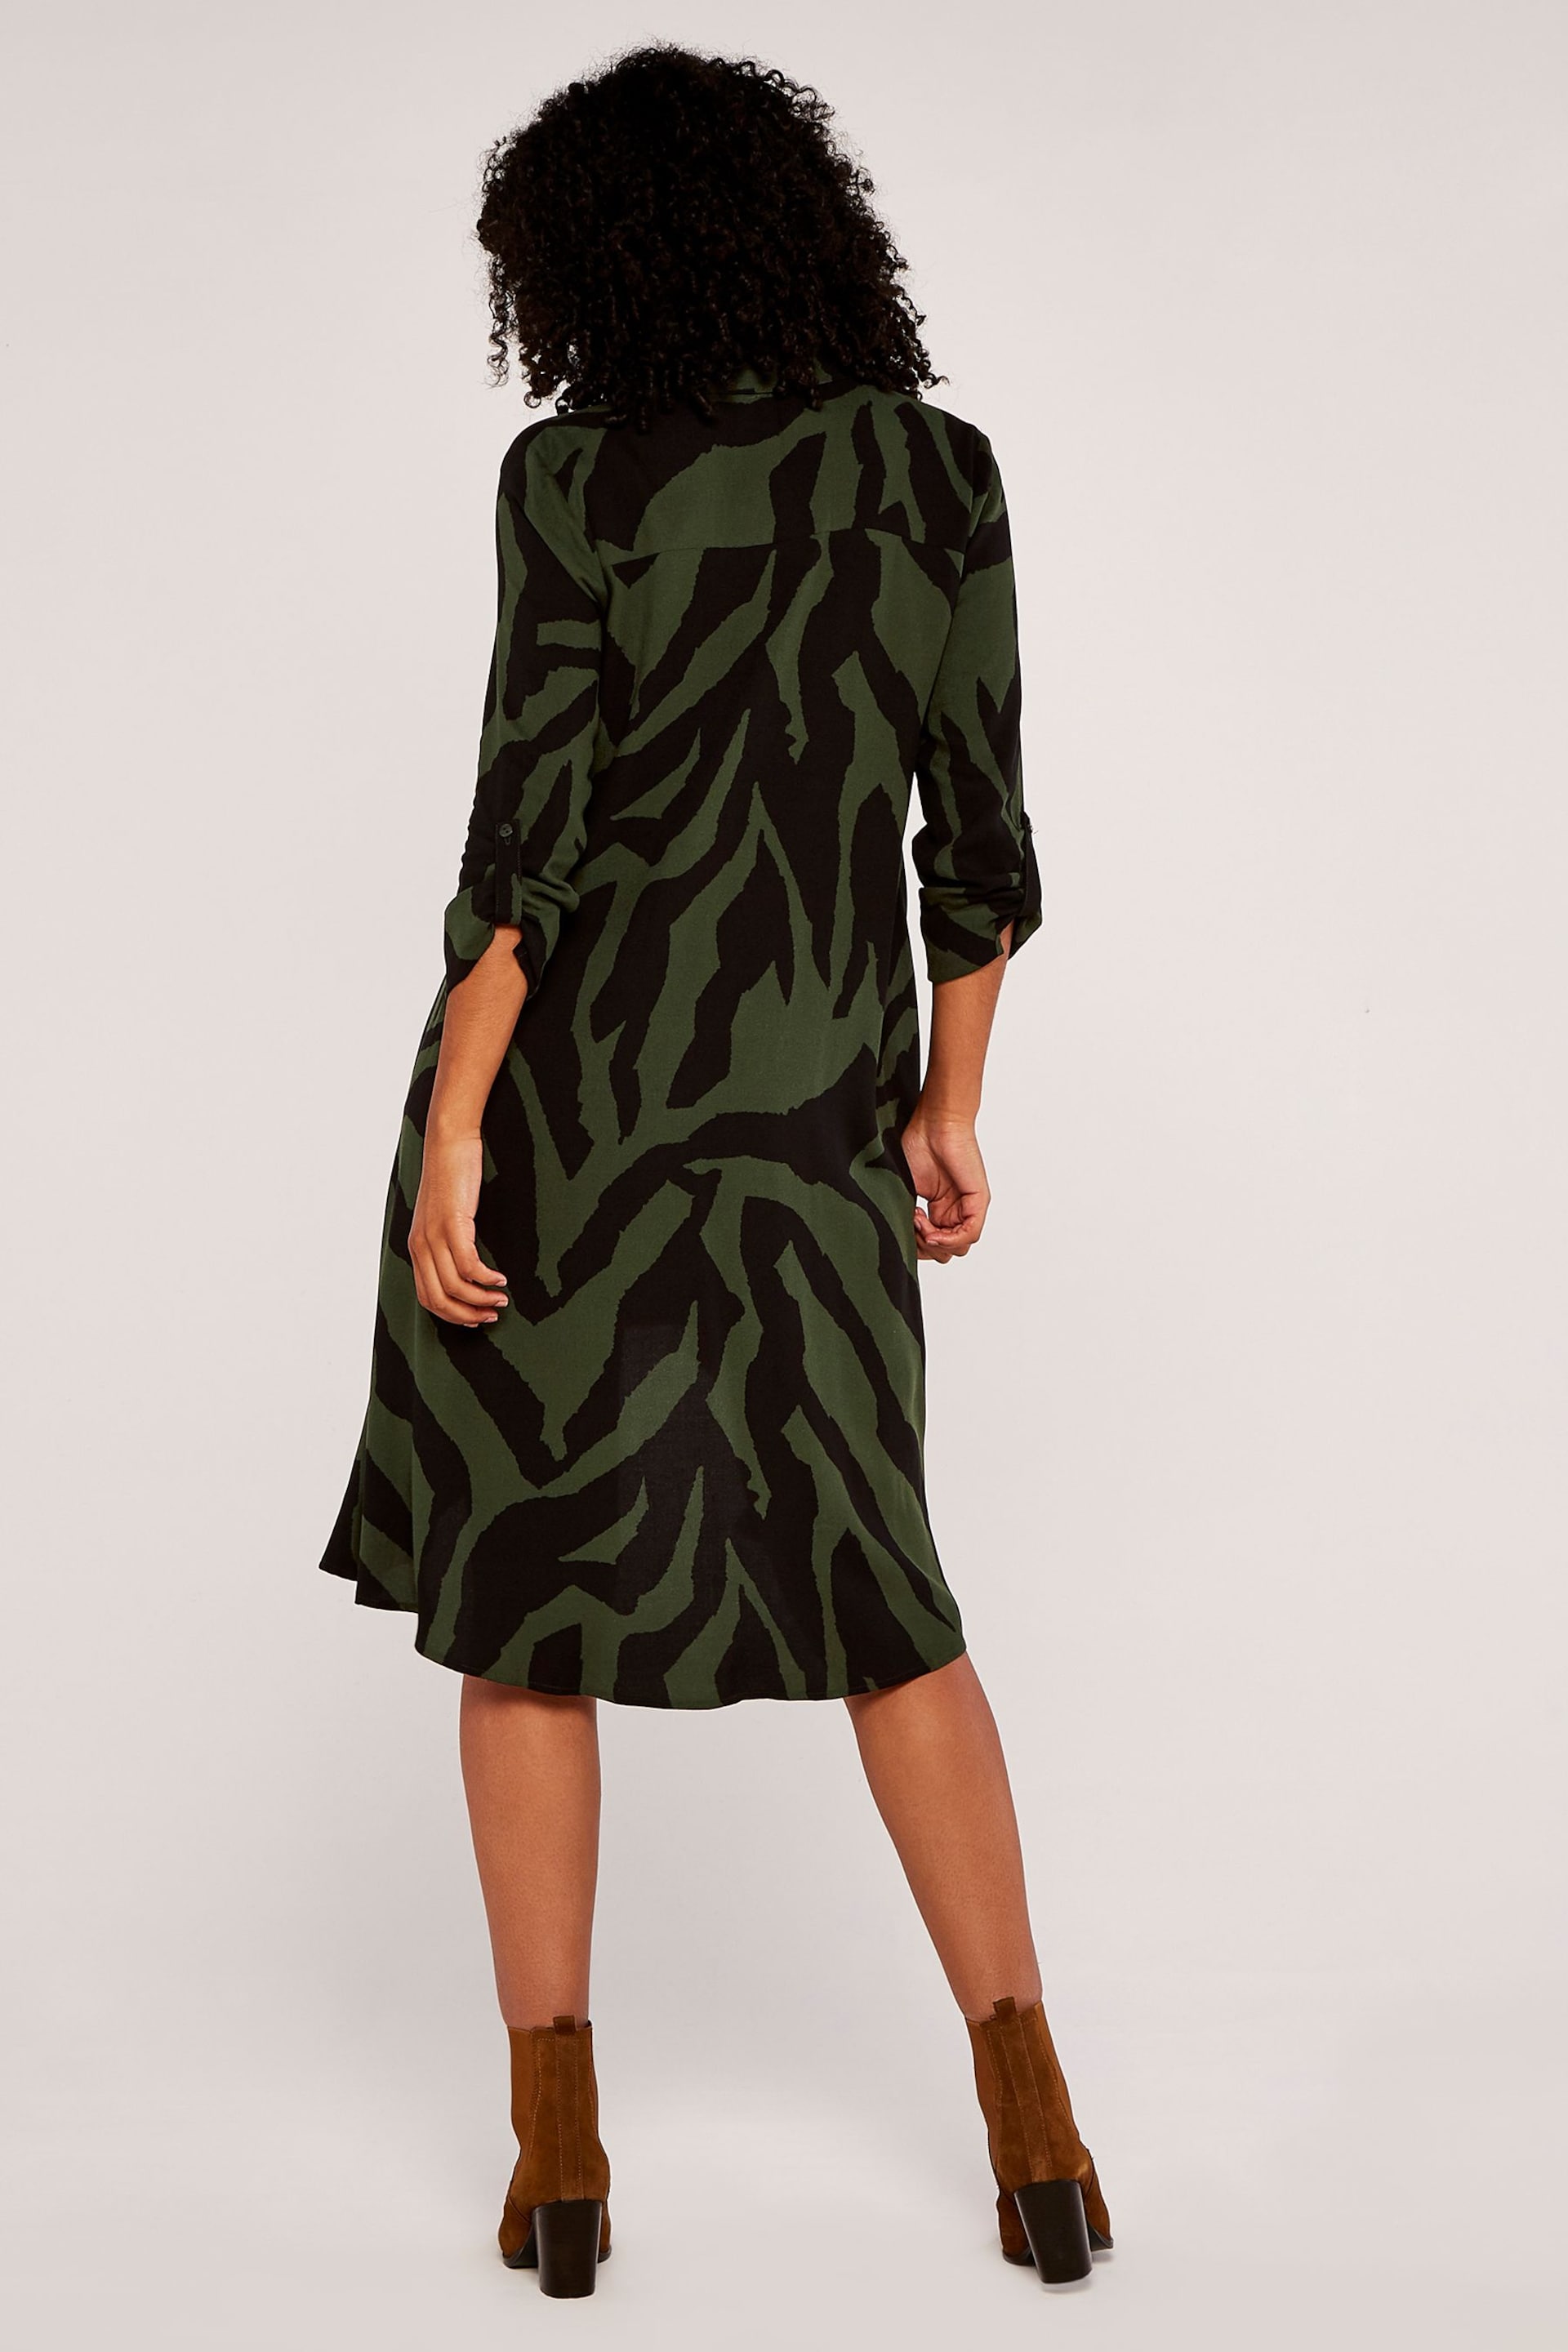 Apricot Khaki Green Zebra Oversized High Low Dress - Image 2 of 4